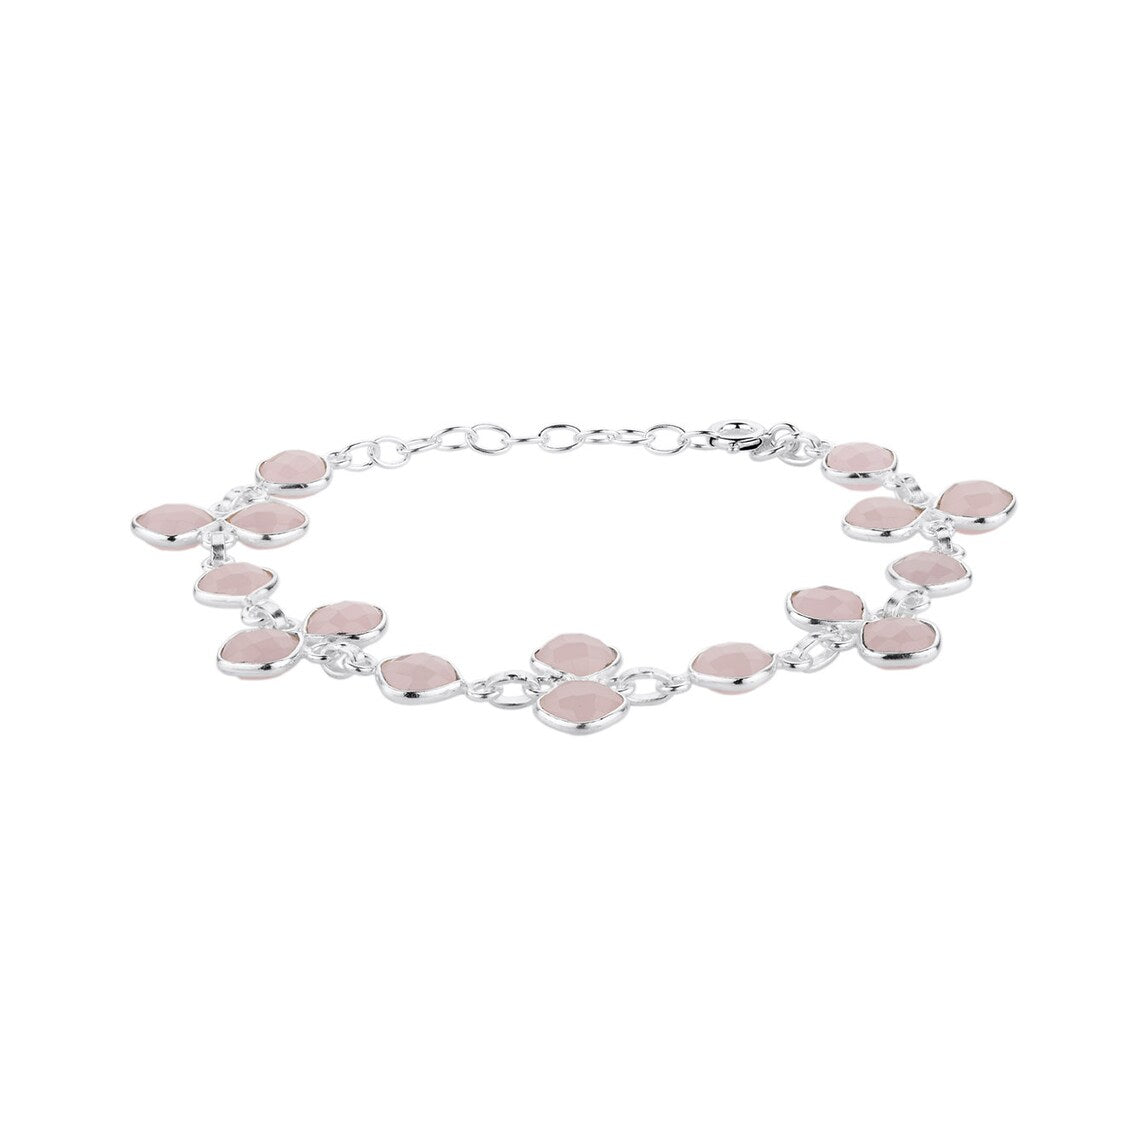 Pink Chalcedony bracelet, October Birthstone bracelet, mothers jewelry, personalized bridesmaid bracelet wife gifts